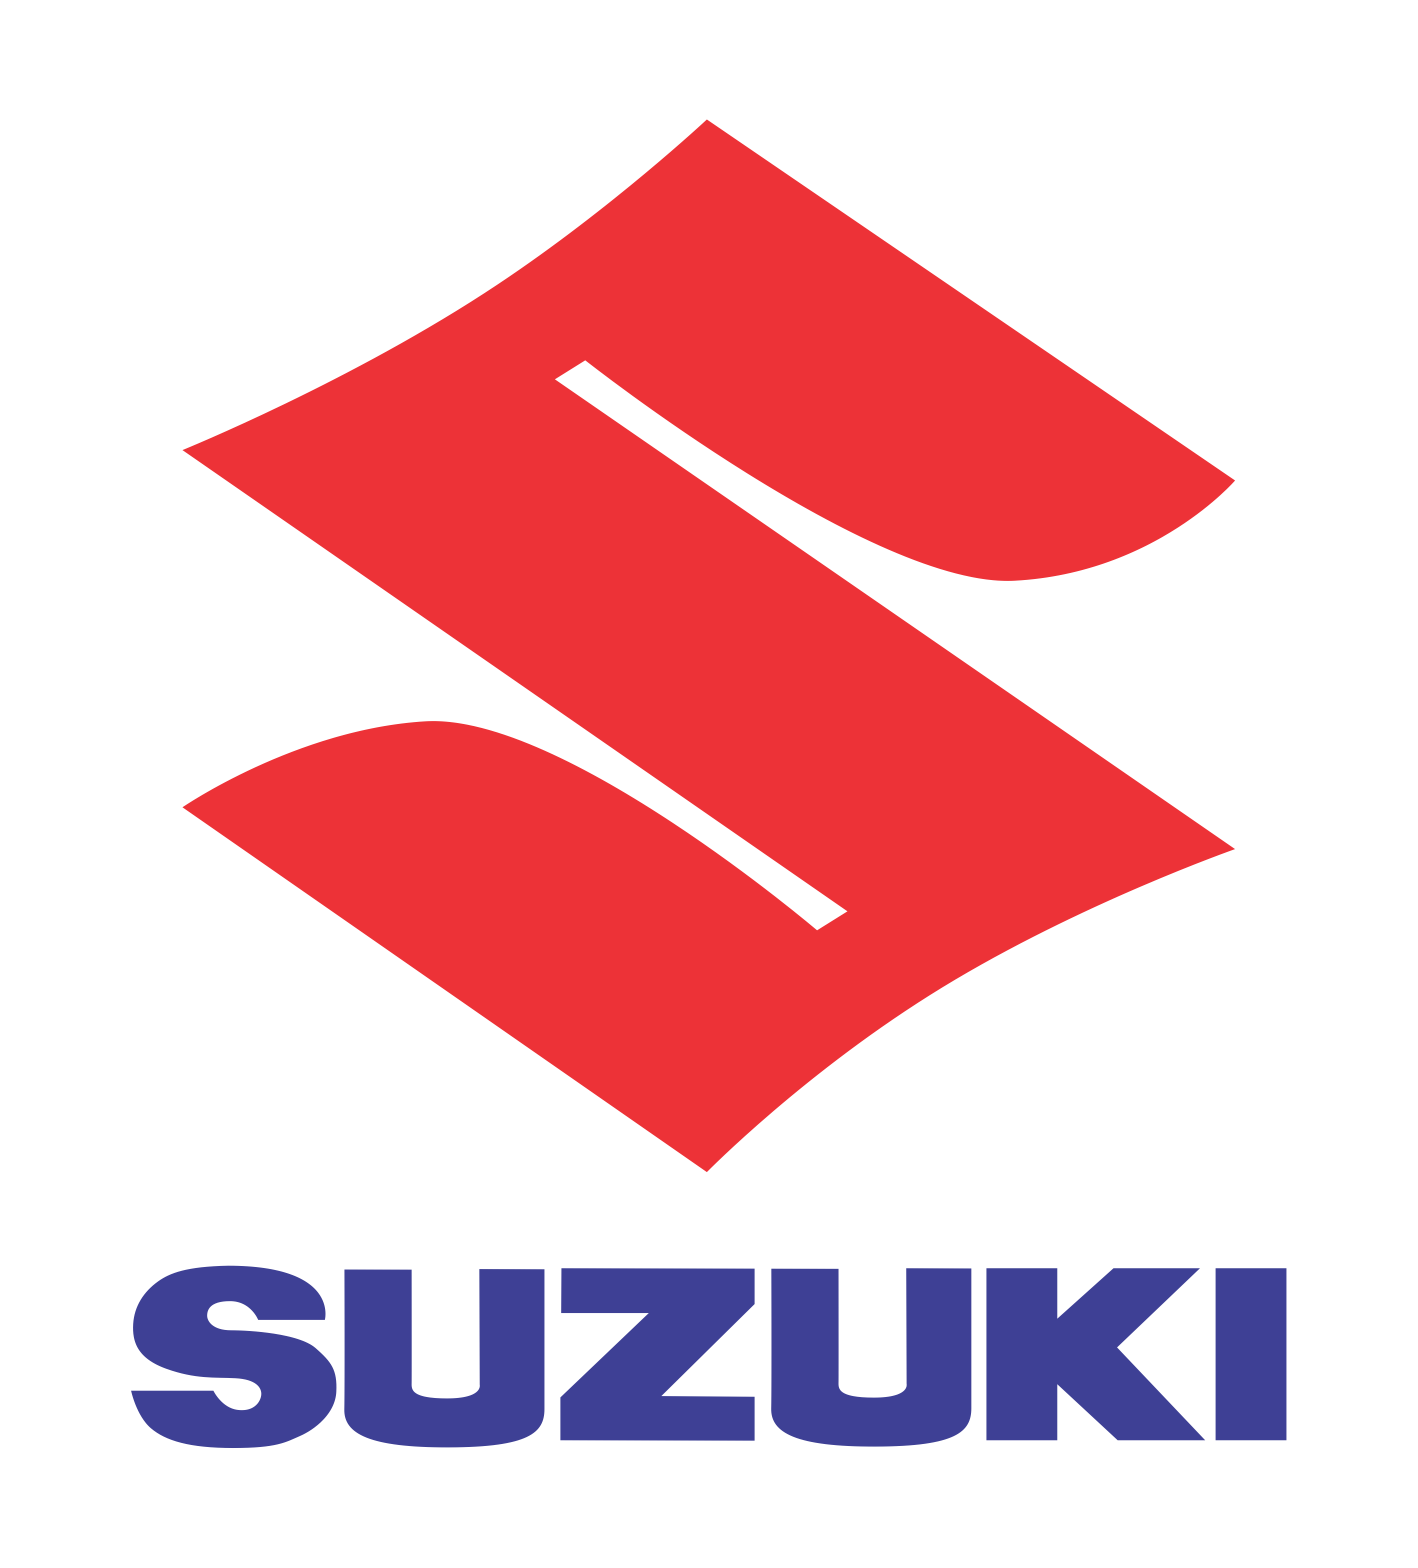 kisspng-suzuki-sx4-car-suzuki-jimny-logo-suzuki-5abc688b533971.2689314015222969713409